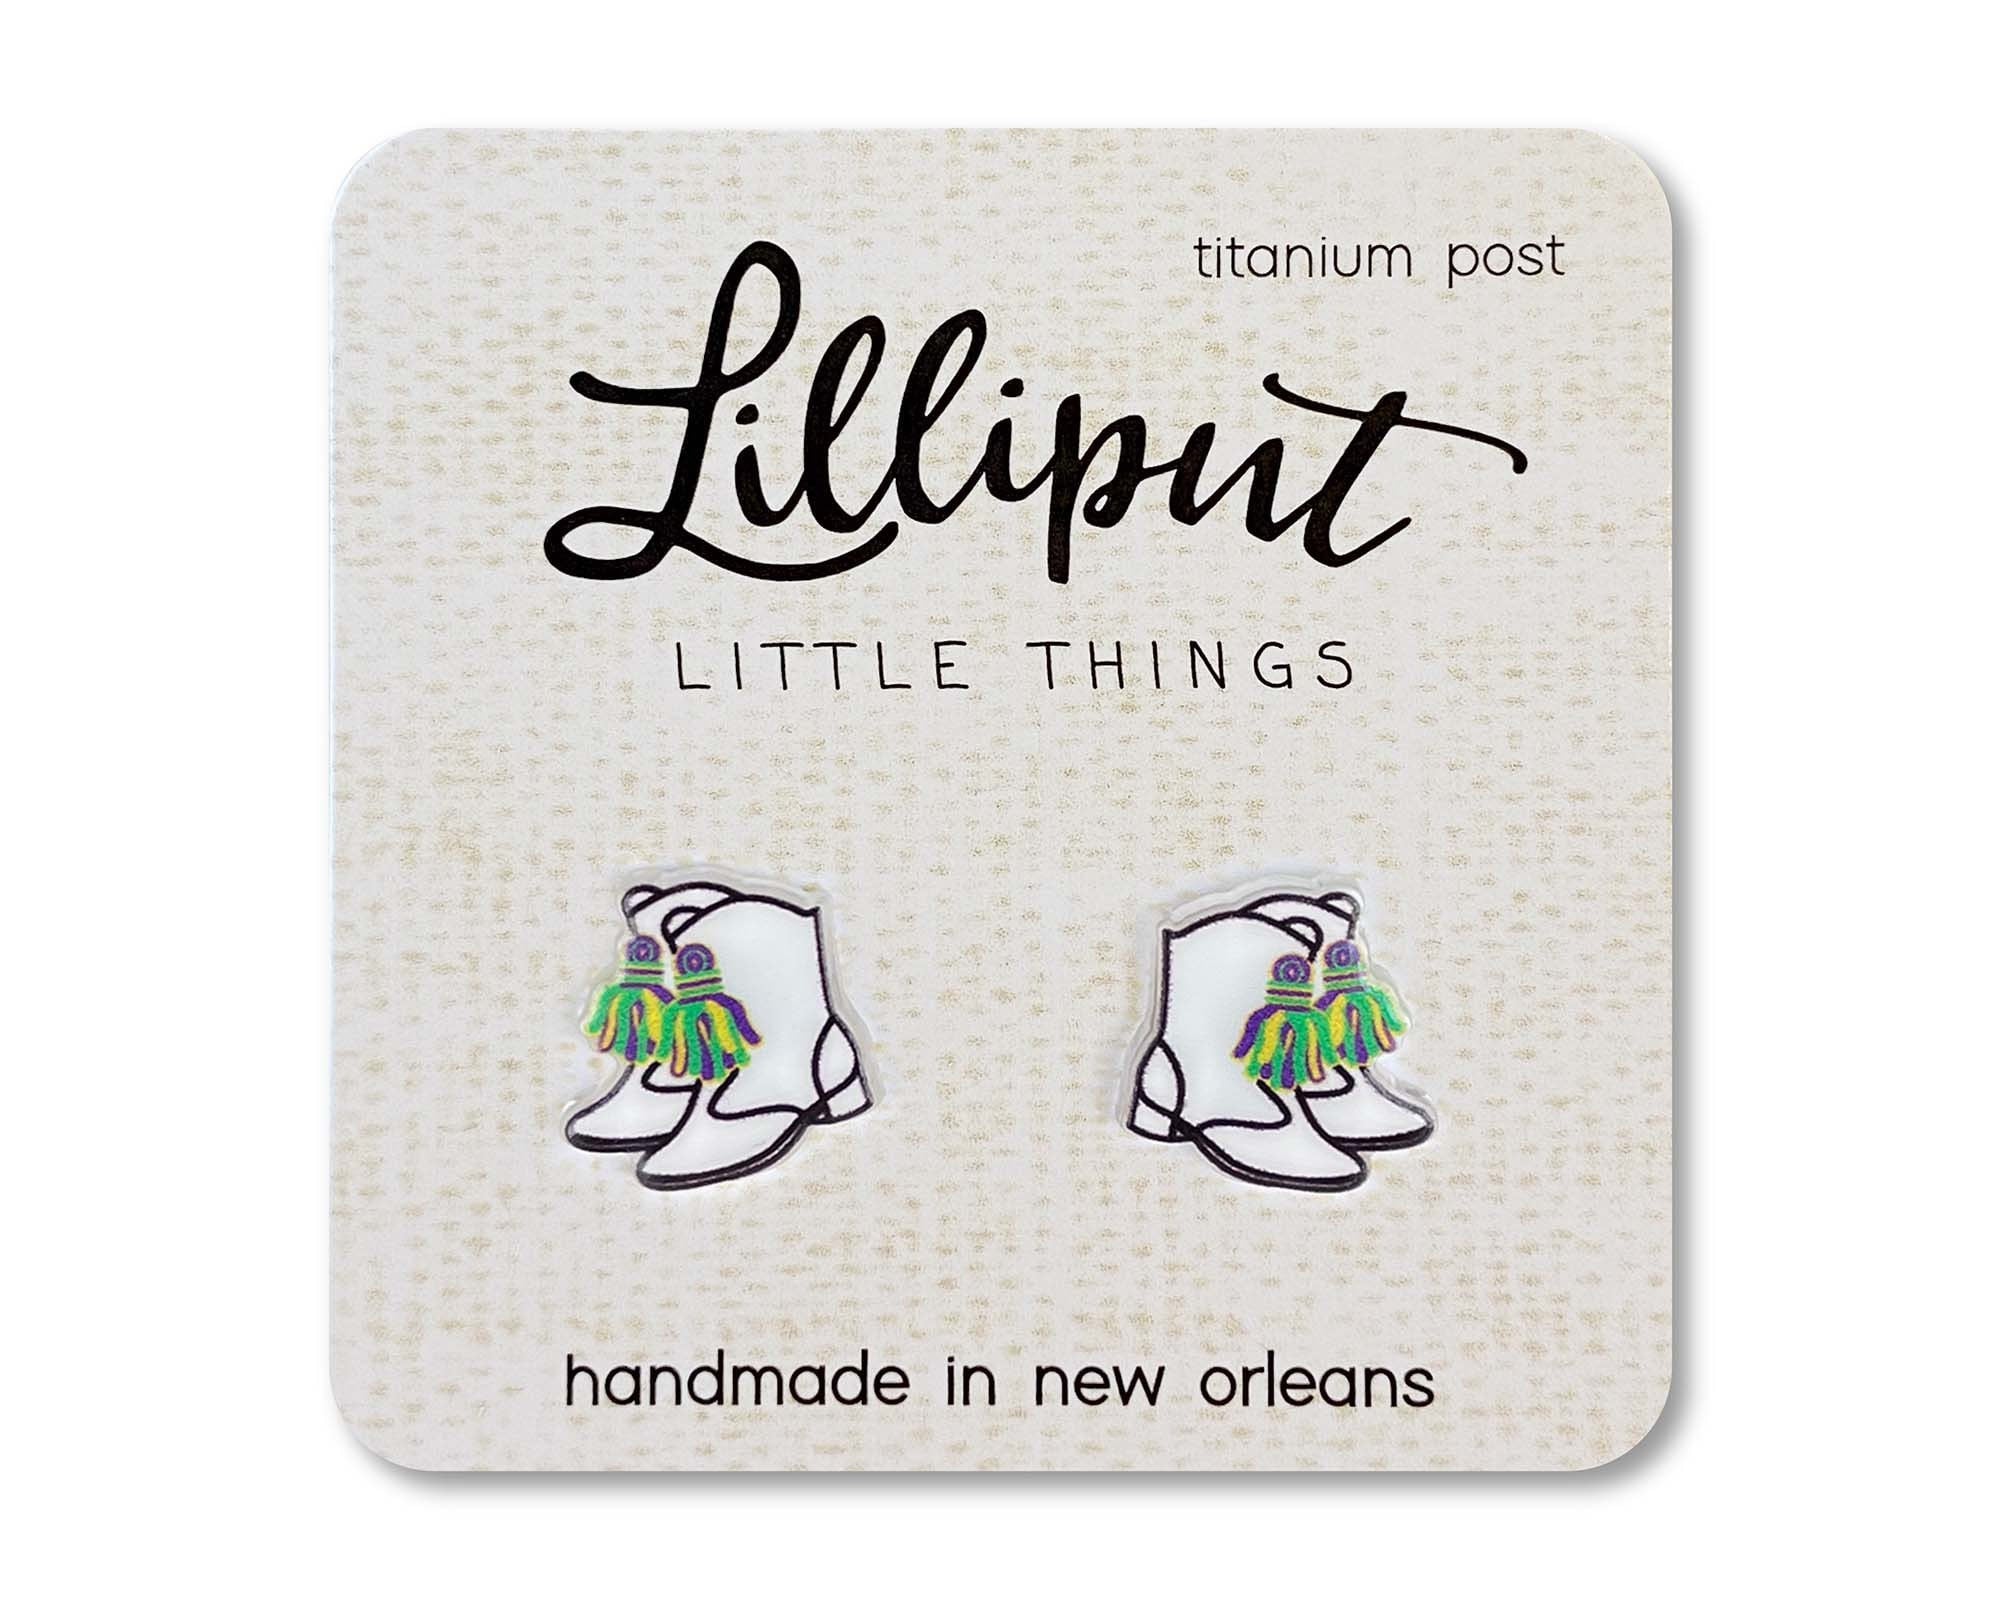 Lilliput Little Things - Fun, Quirky, Unique Titanium Post Earrings